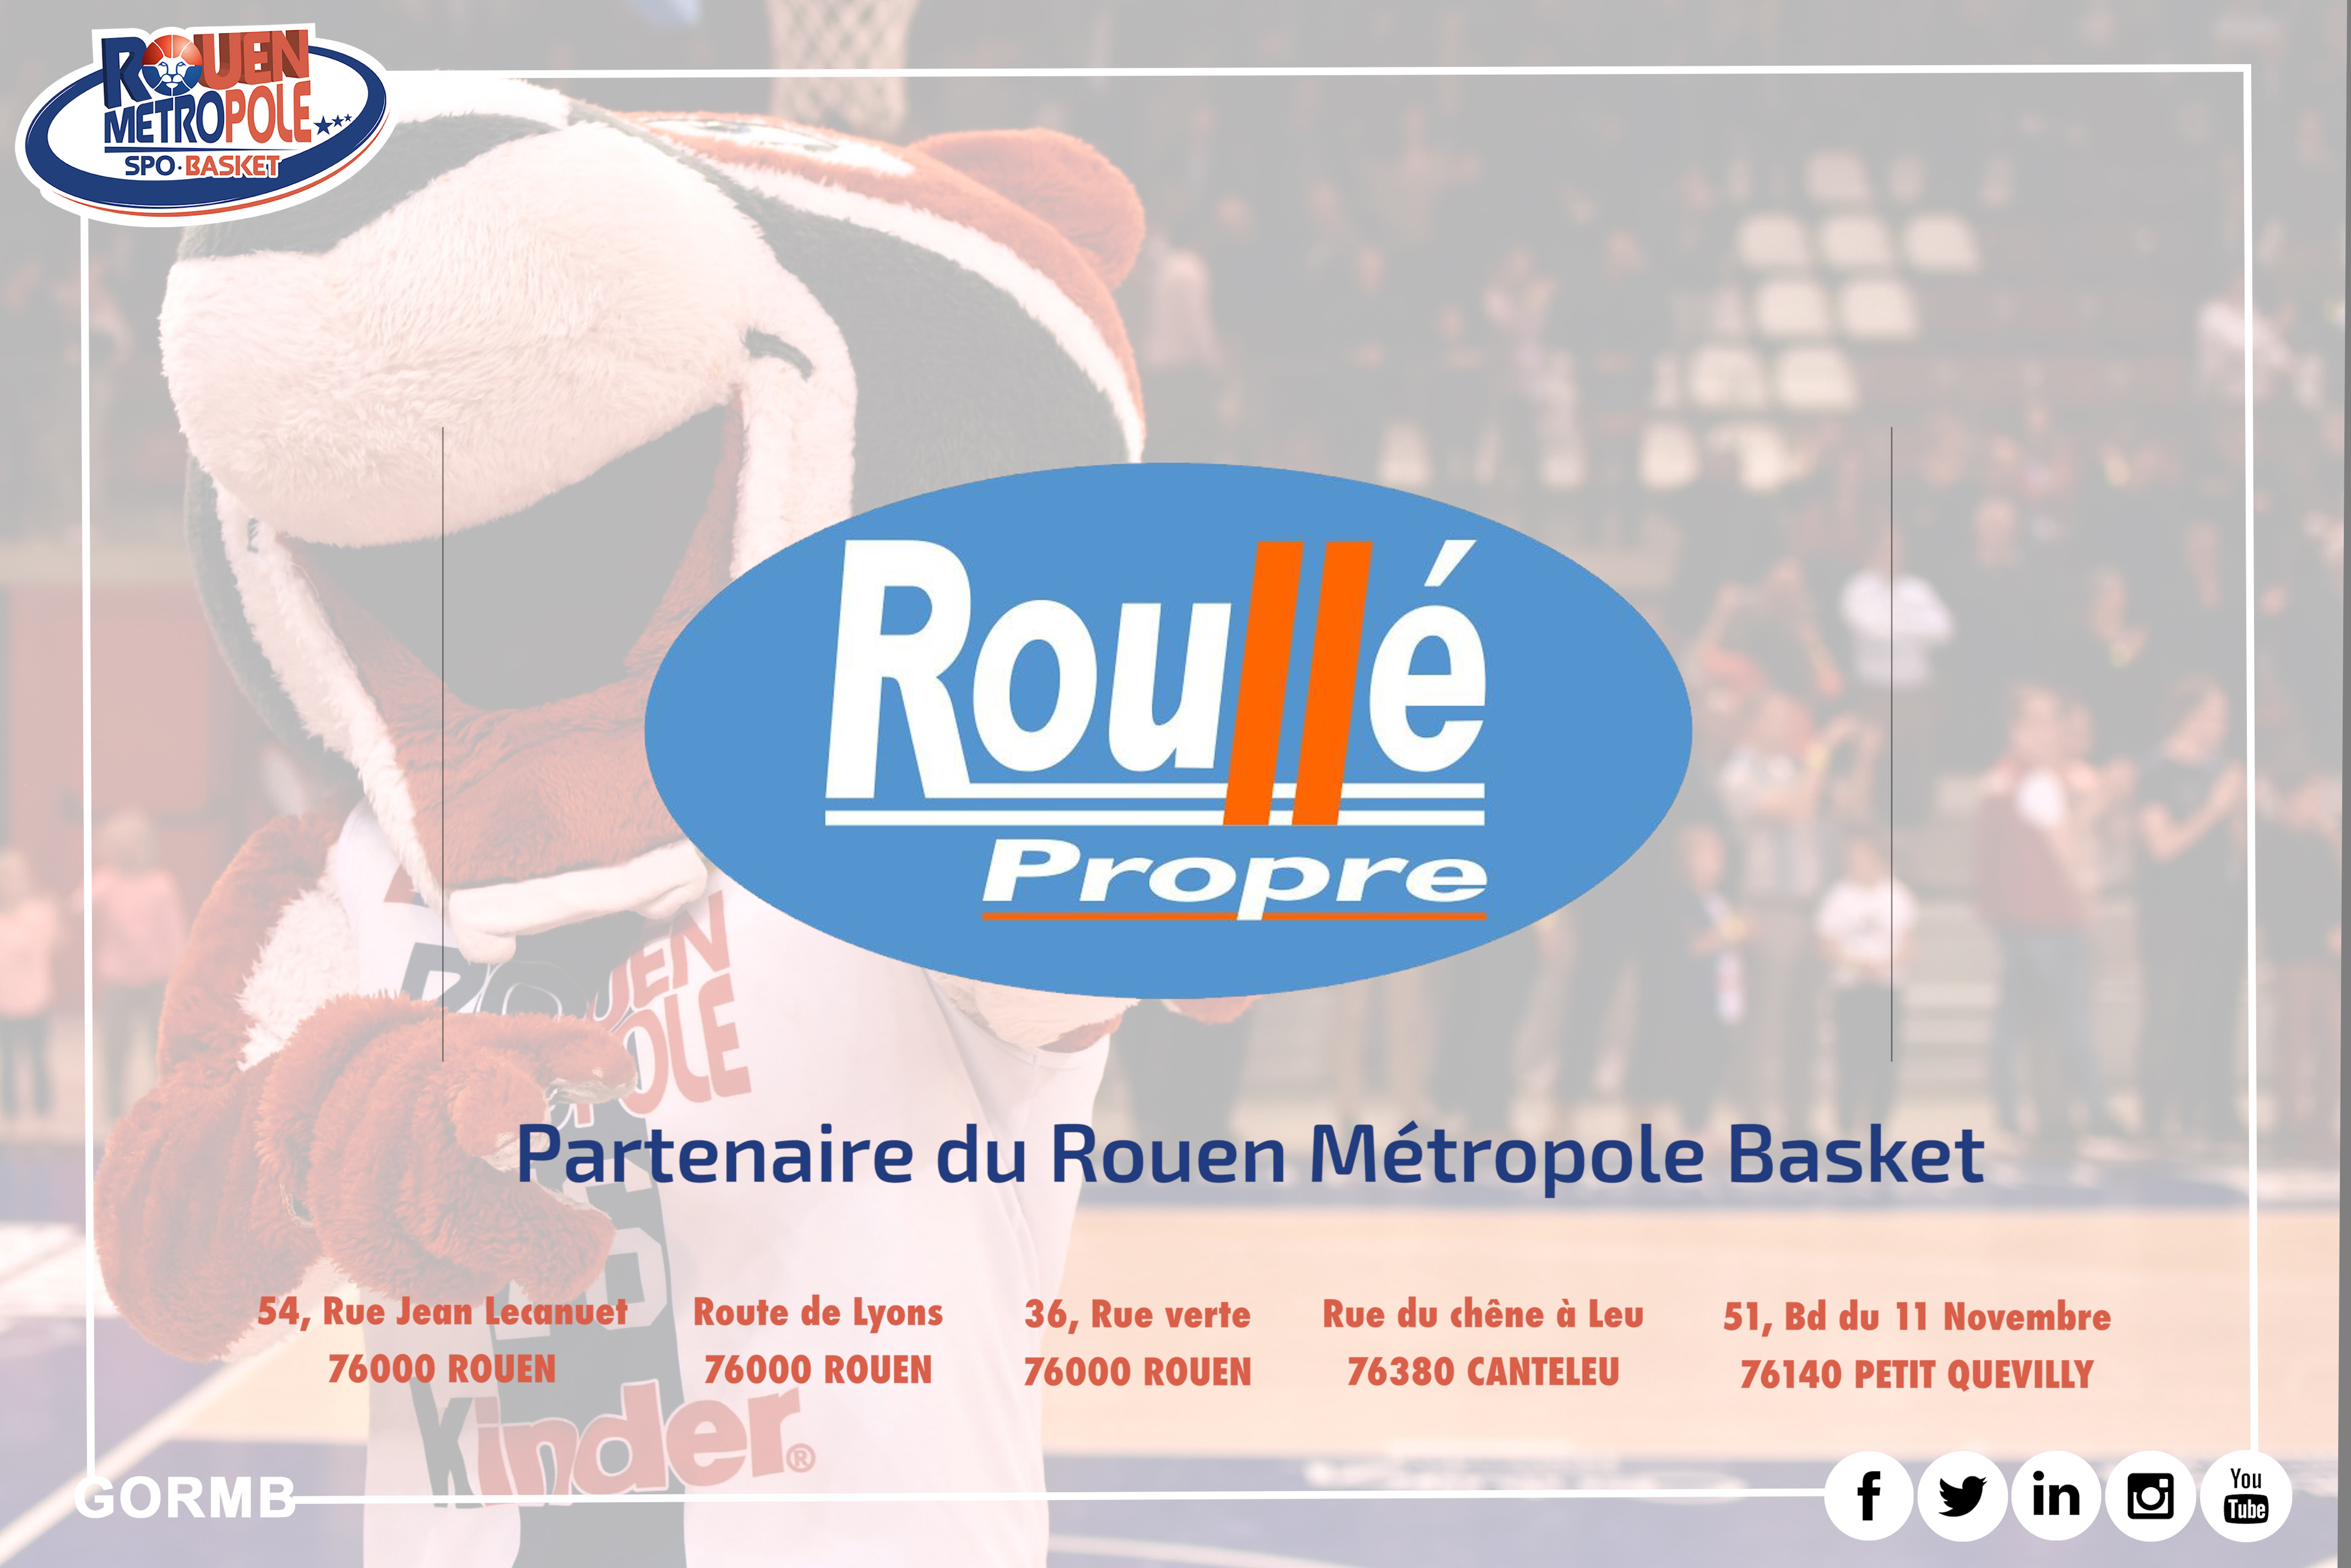 https://www.rouenmetrobasket.com/wp-content/uploads/2019/08/ROULLE-PROPRE.jpg